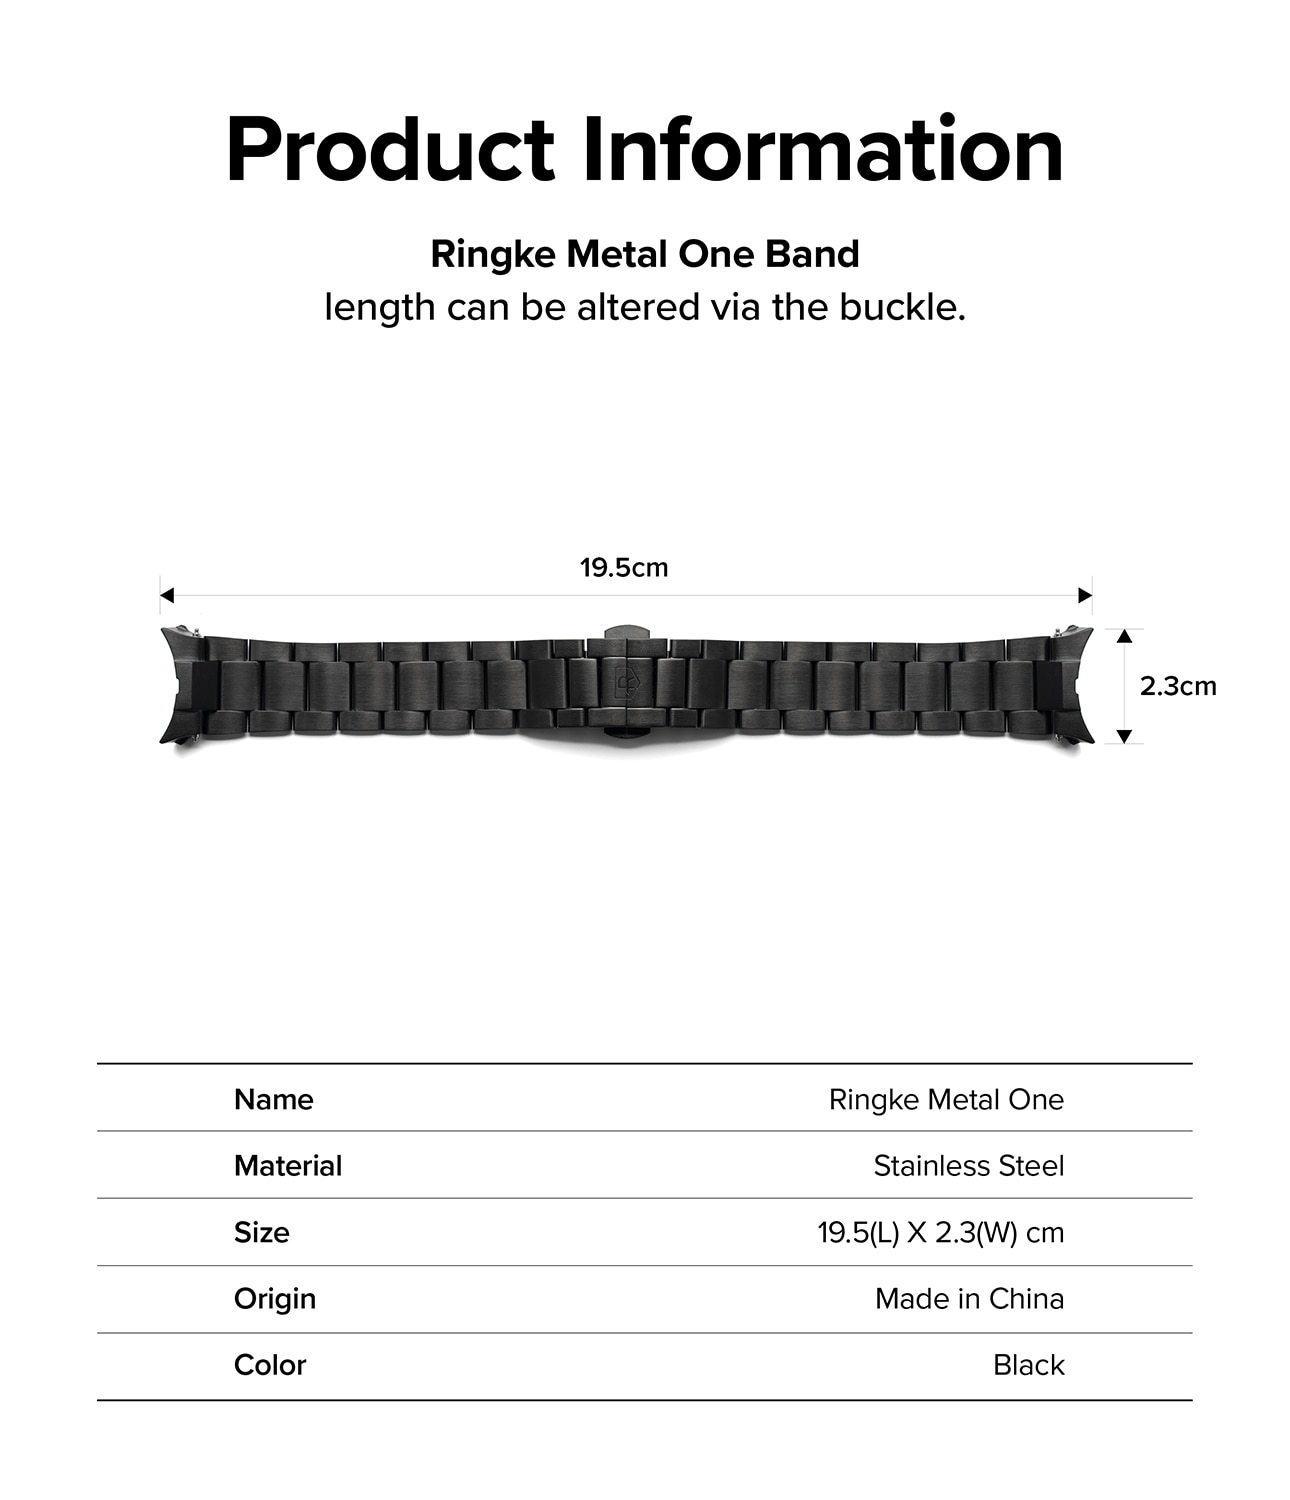 Metal One Armband Samsung Galaxy Watch 4 44mm Zwart